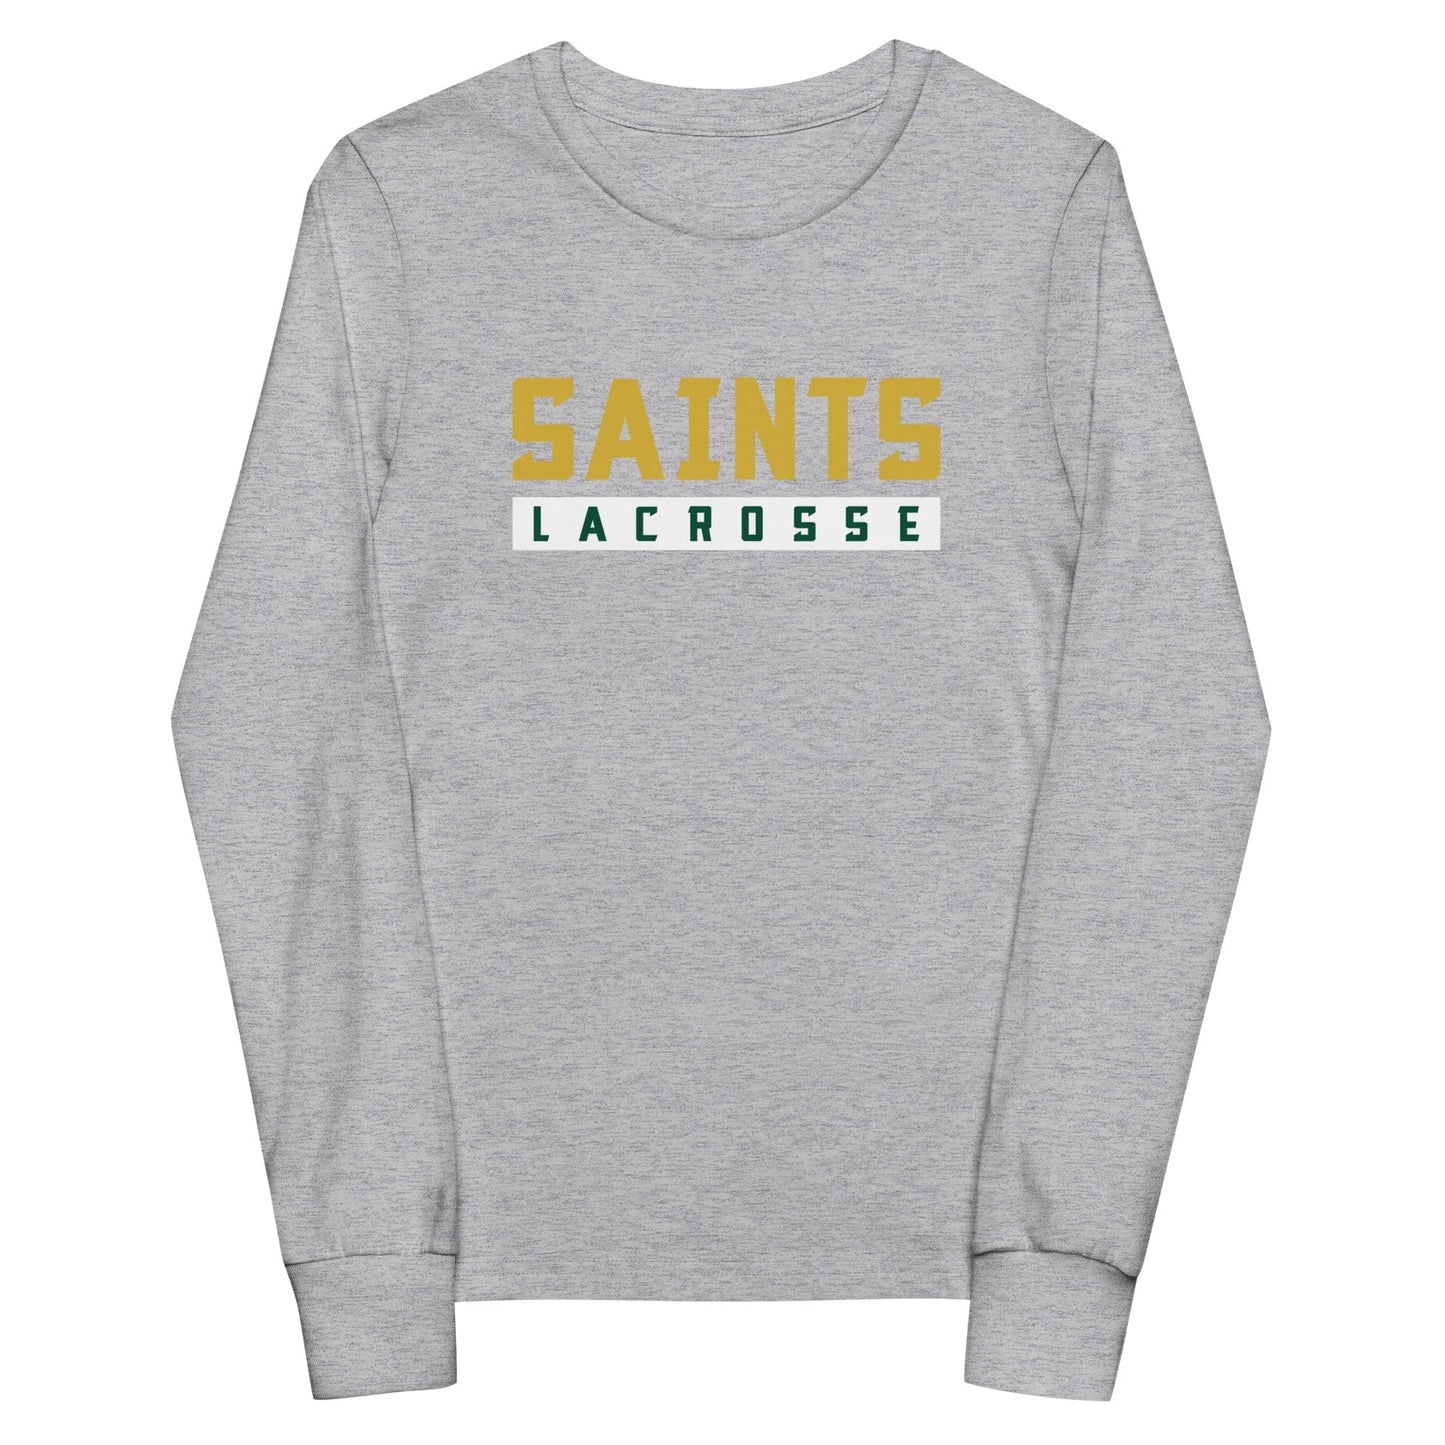 Briarcrest Lacrosse Youth Cotton Long Sleeve T-Shirt Signature Lacrosse